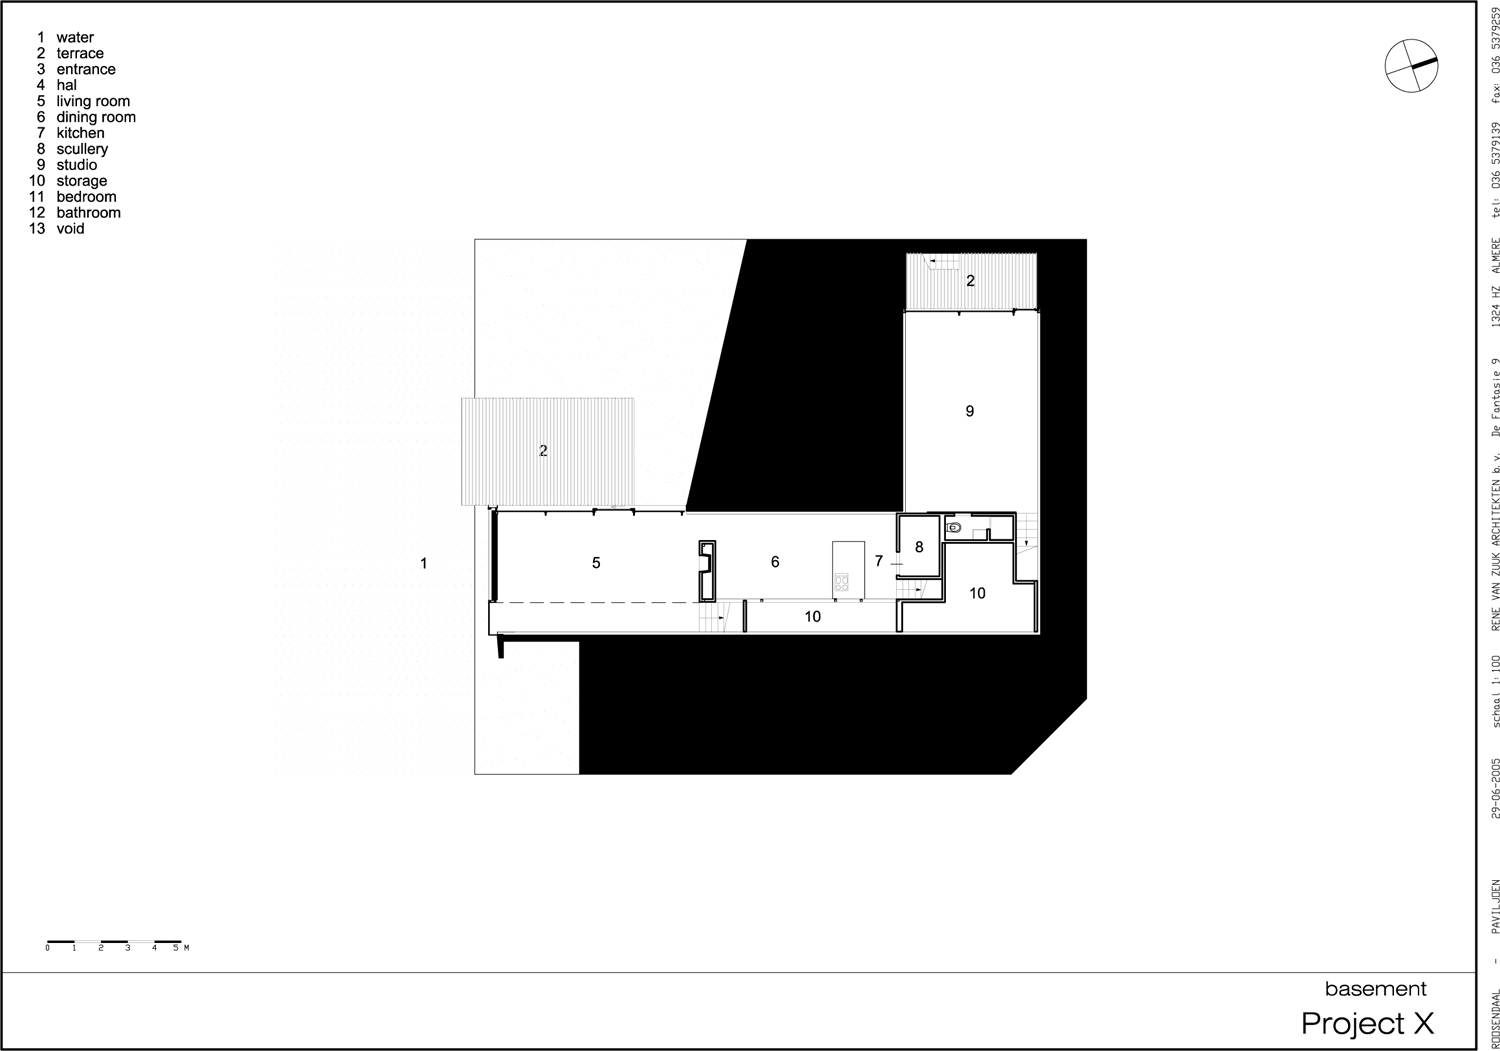 project X - 01 - basement basement plan